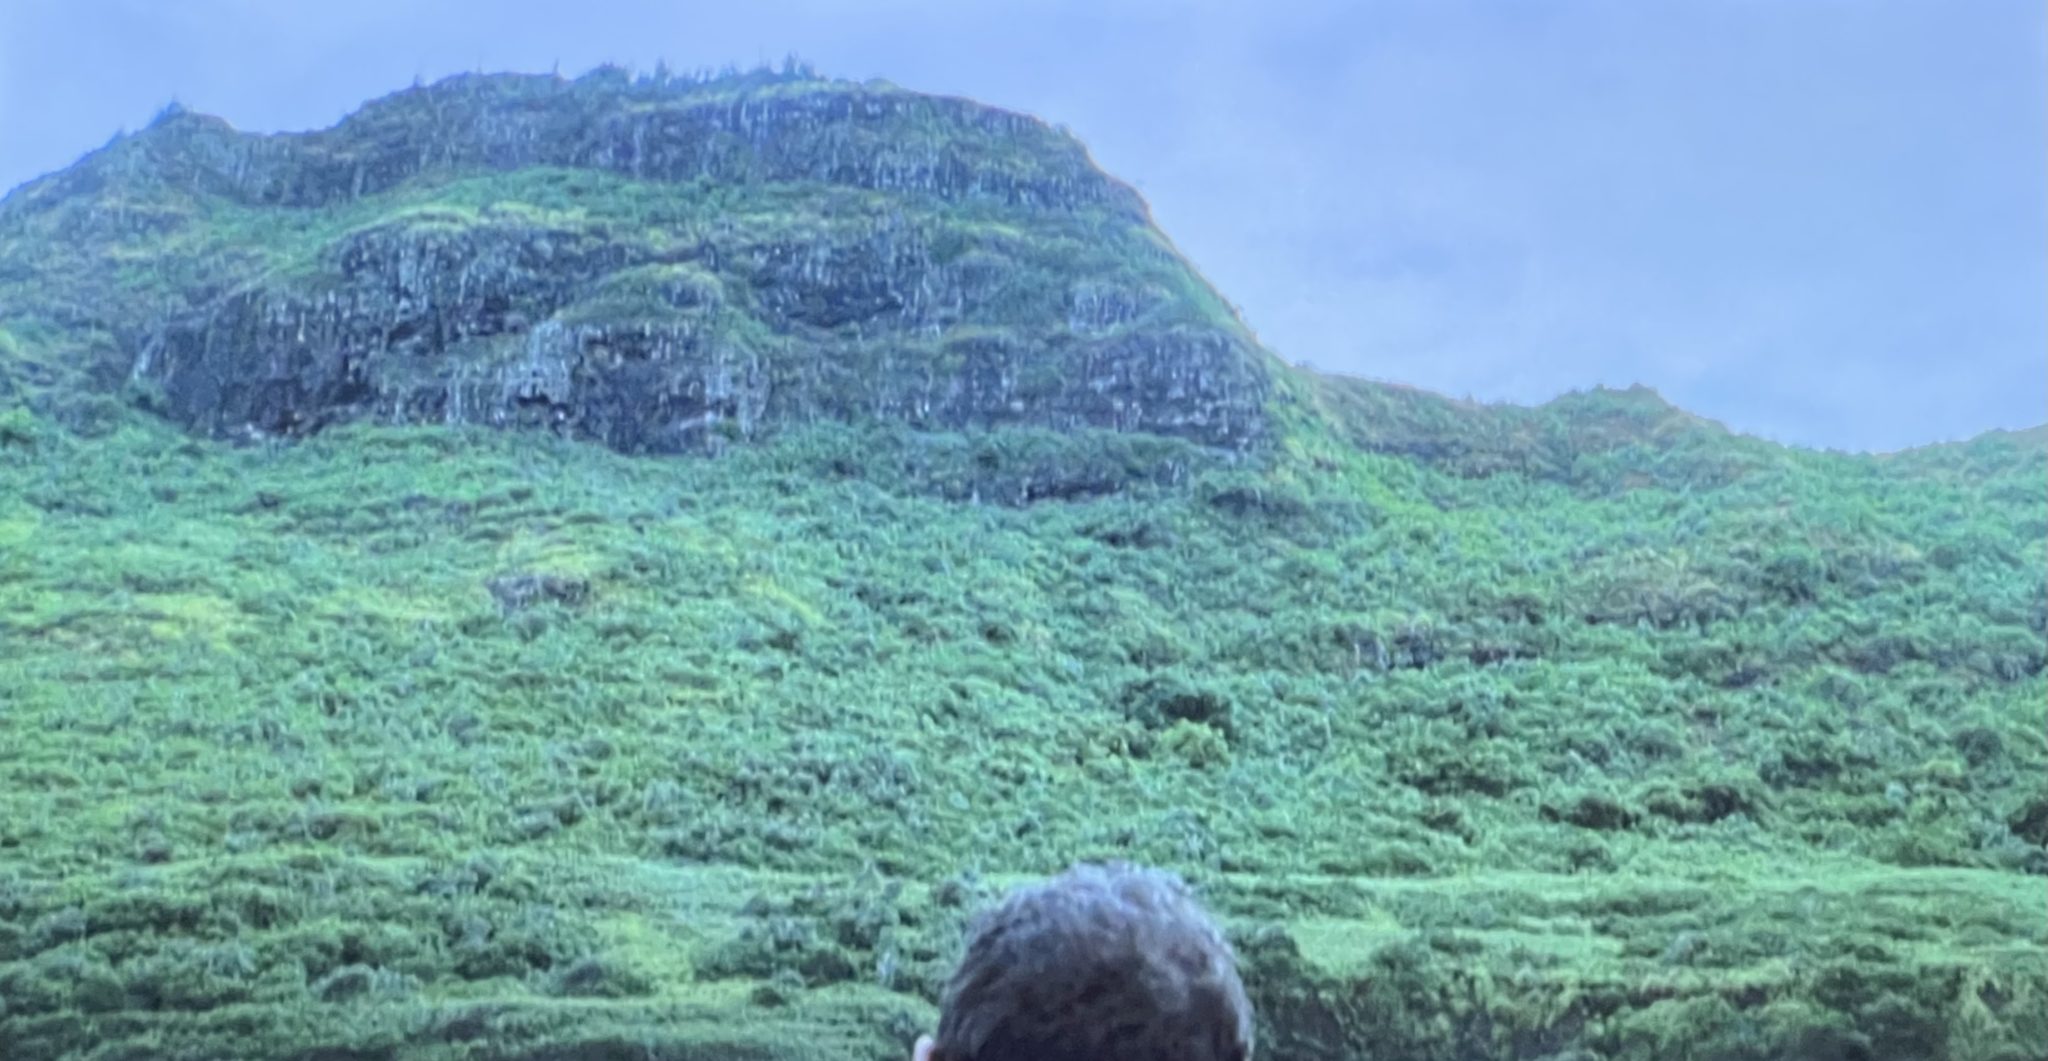 Nawiliwili Harbor, Jurassic Park III movie scene.